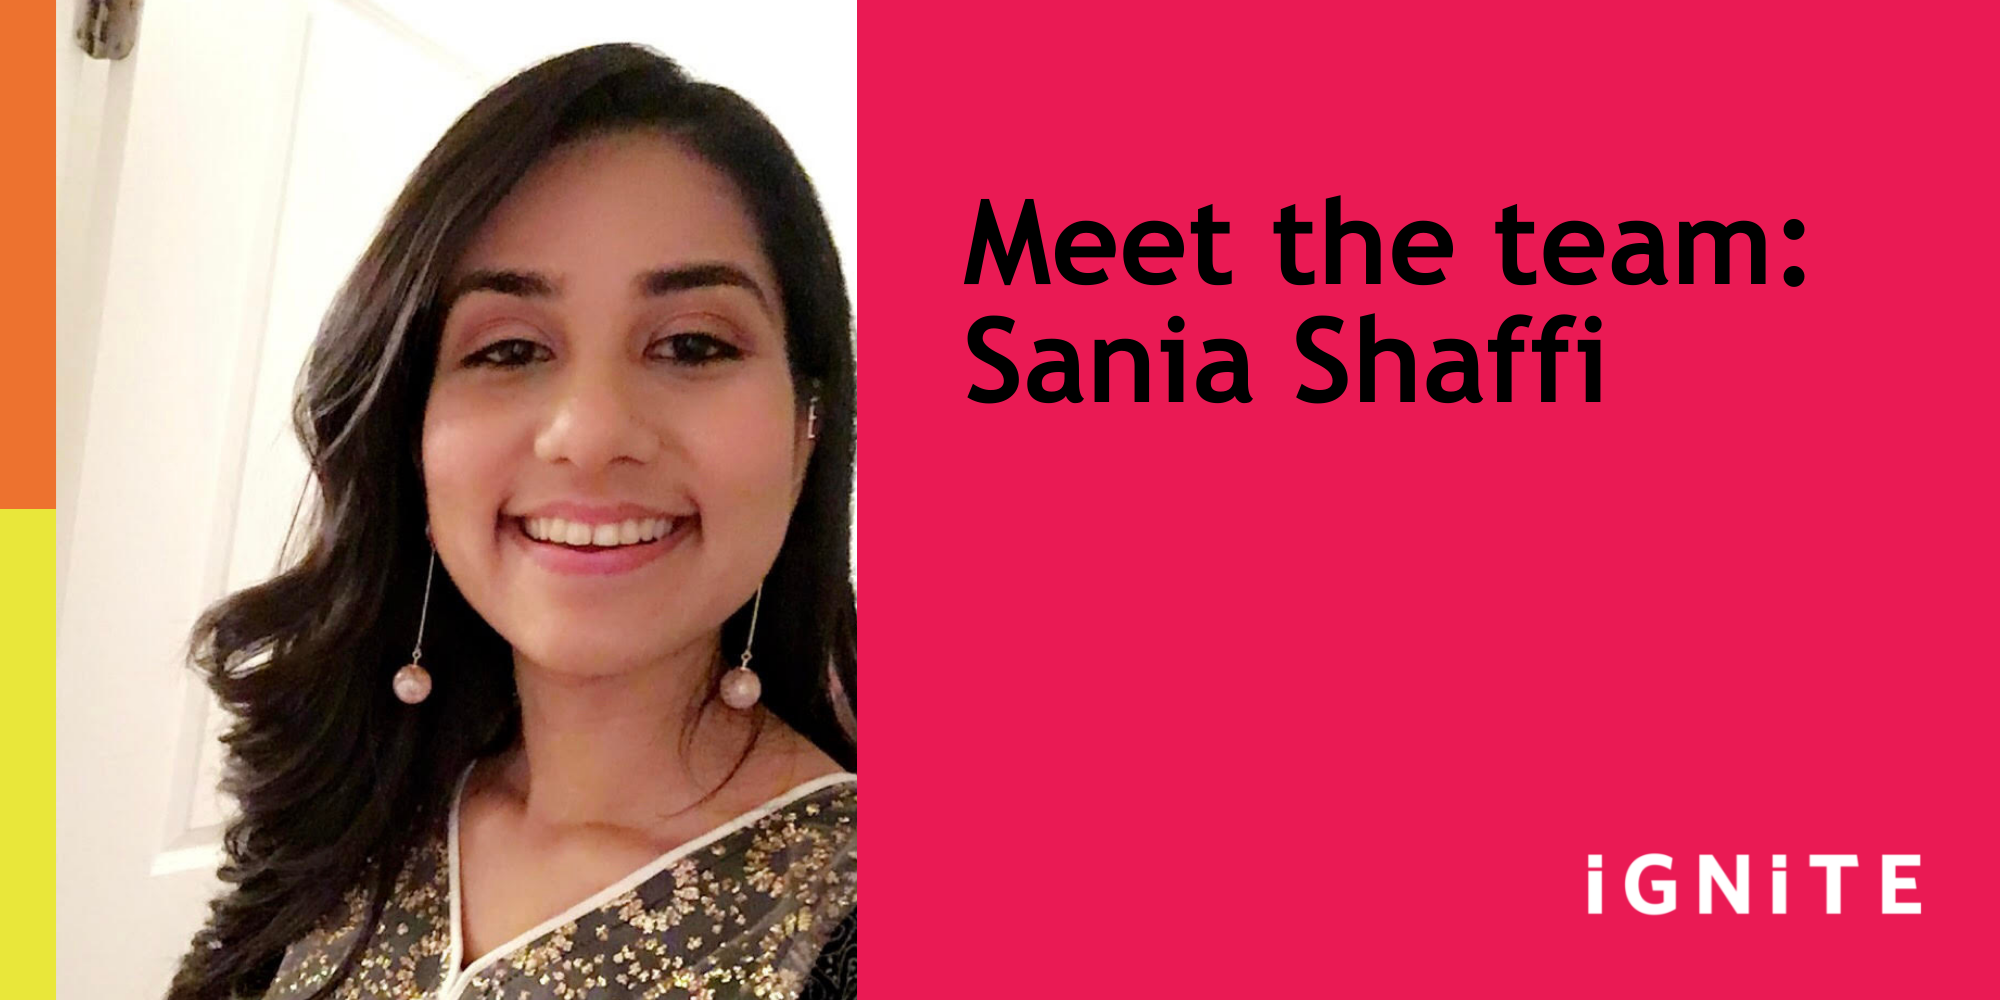 IGNITE welcomes Sania Shaffi to the team!